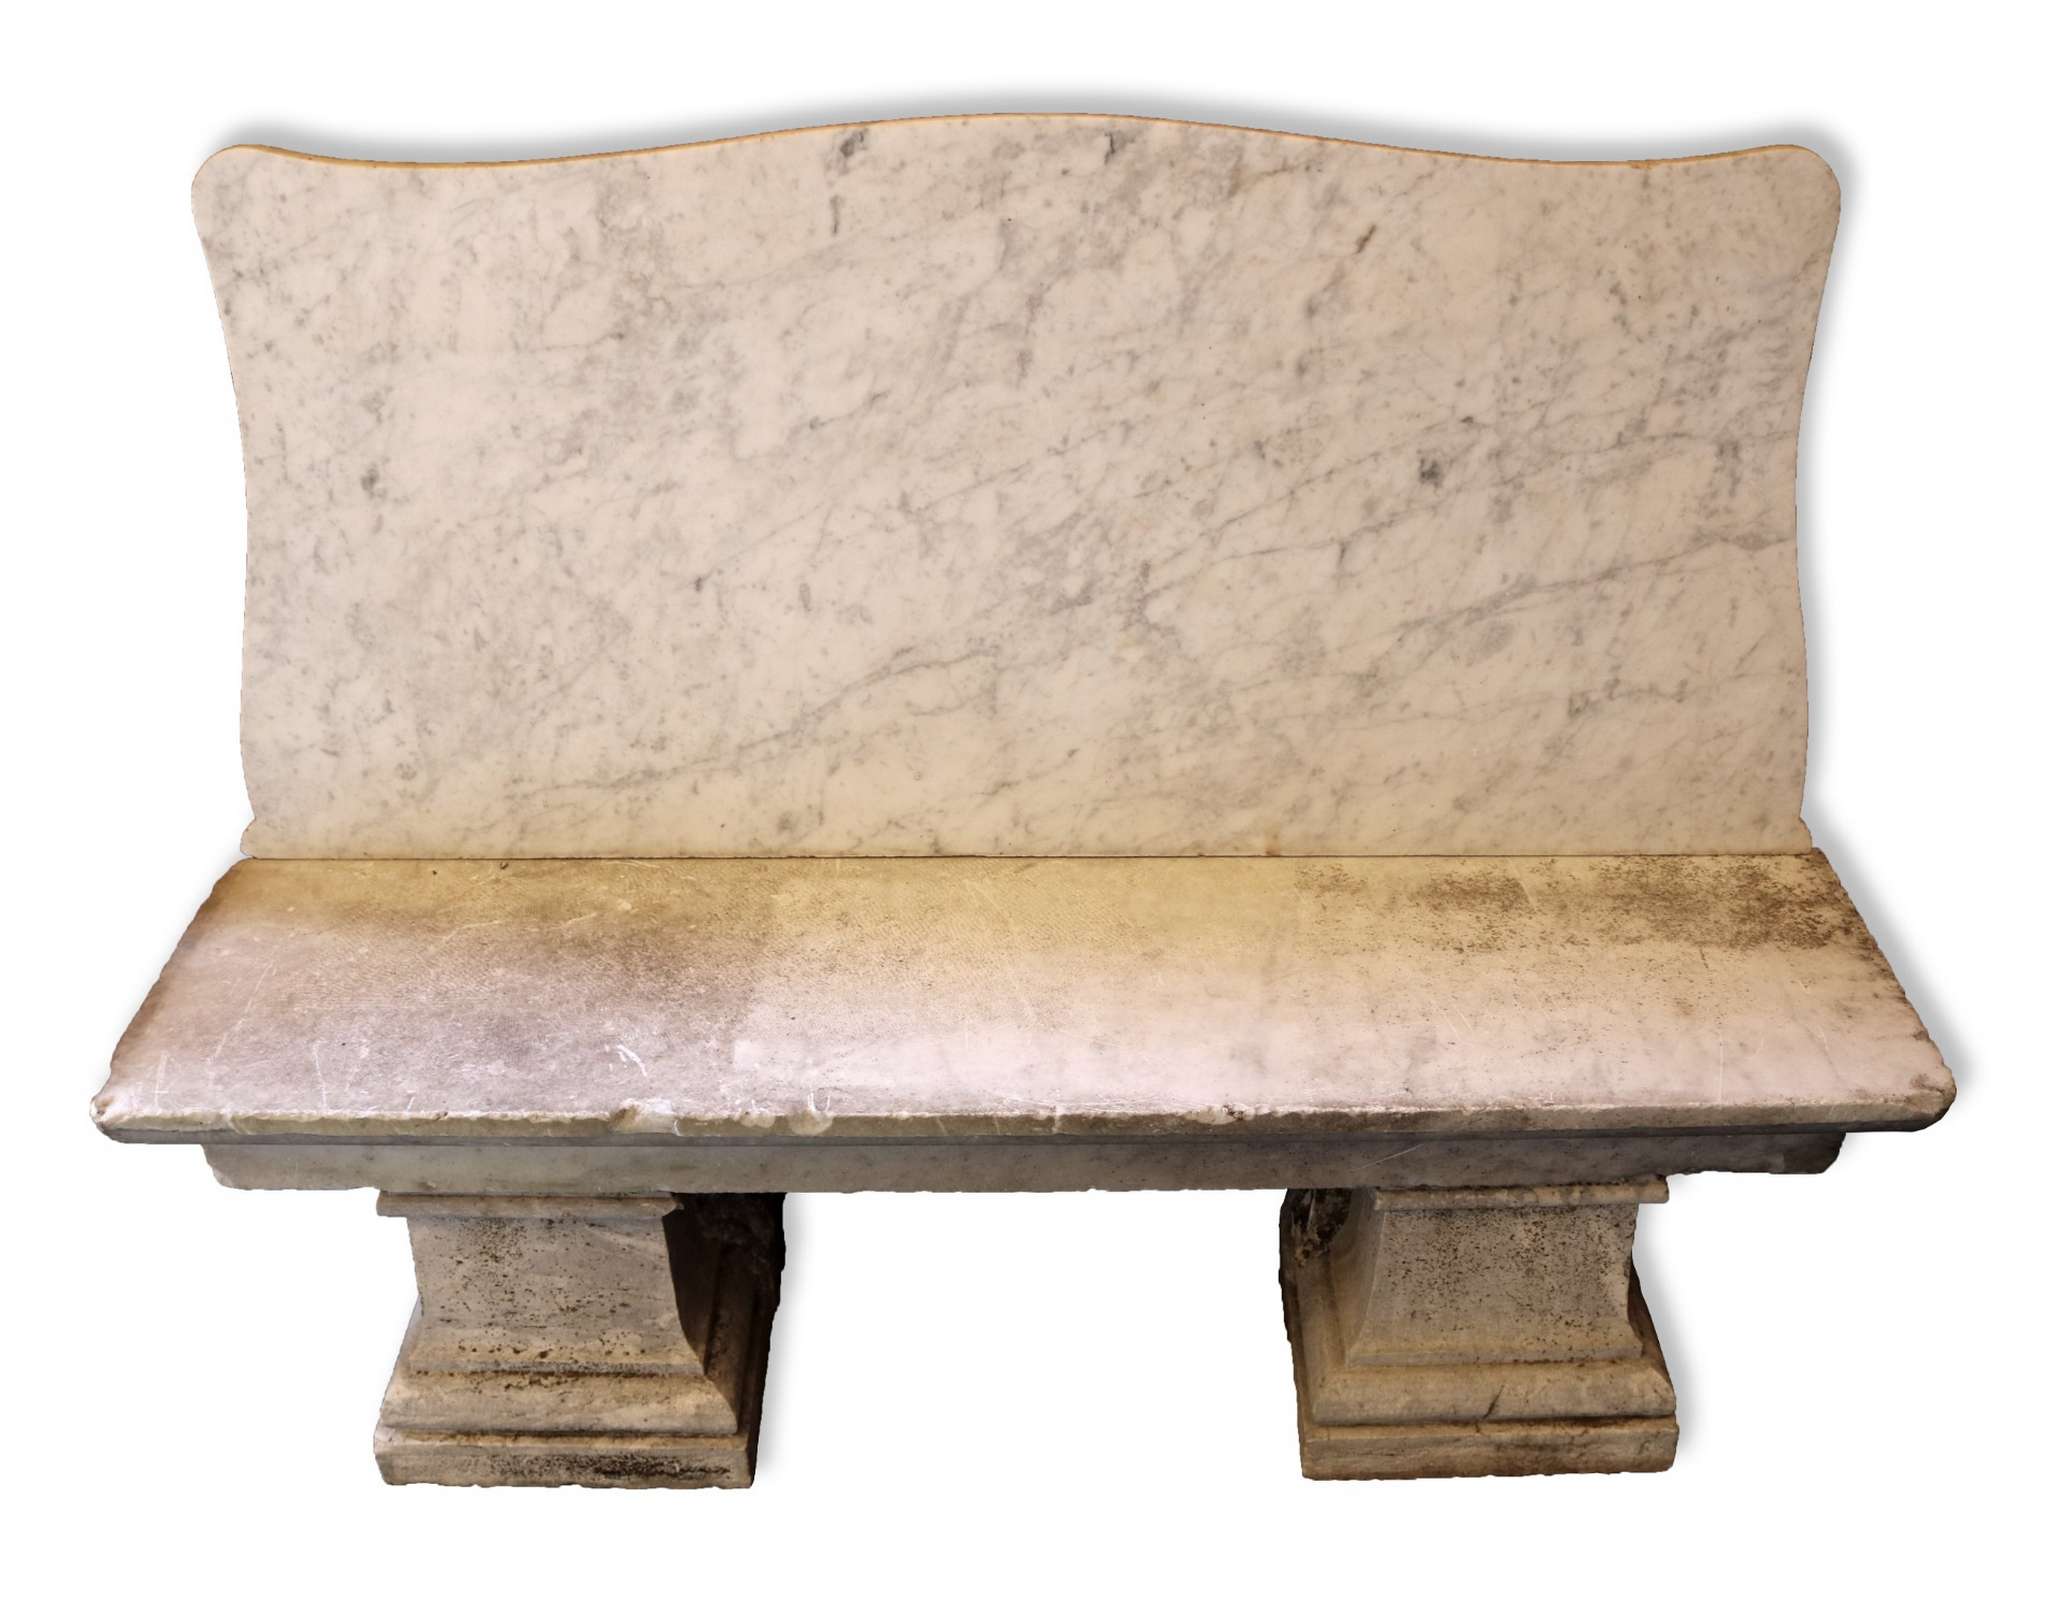 Antica panchina in marmo. Epoca 1800. - 1